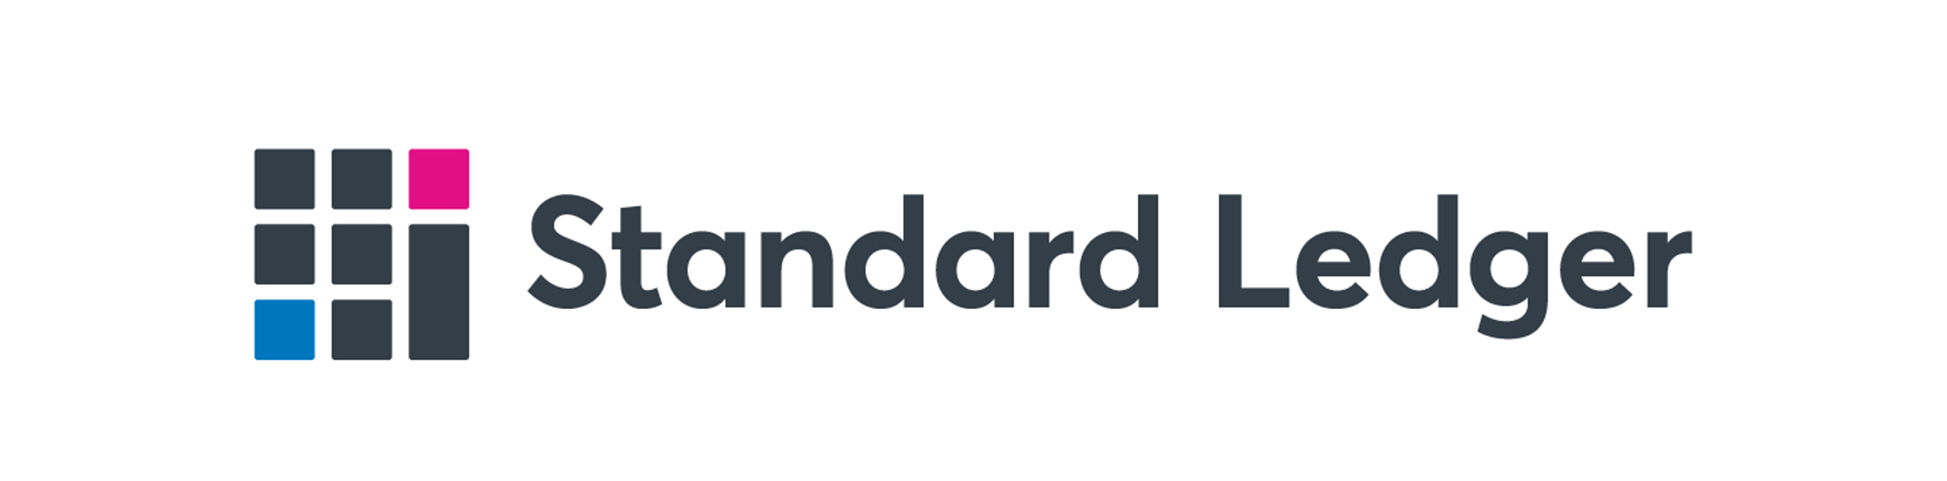 Standard Ledger logo | Ravit Insights